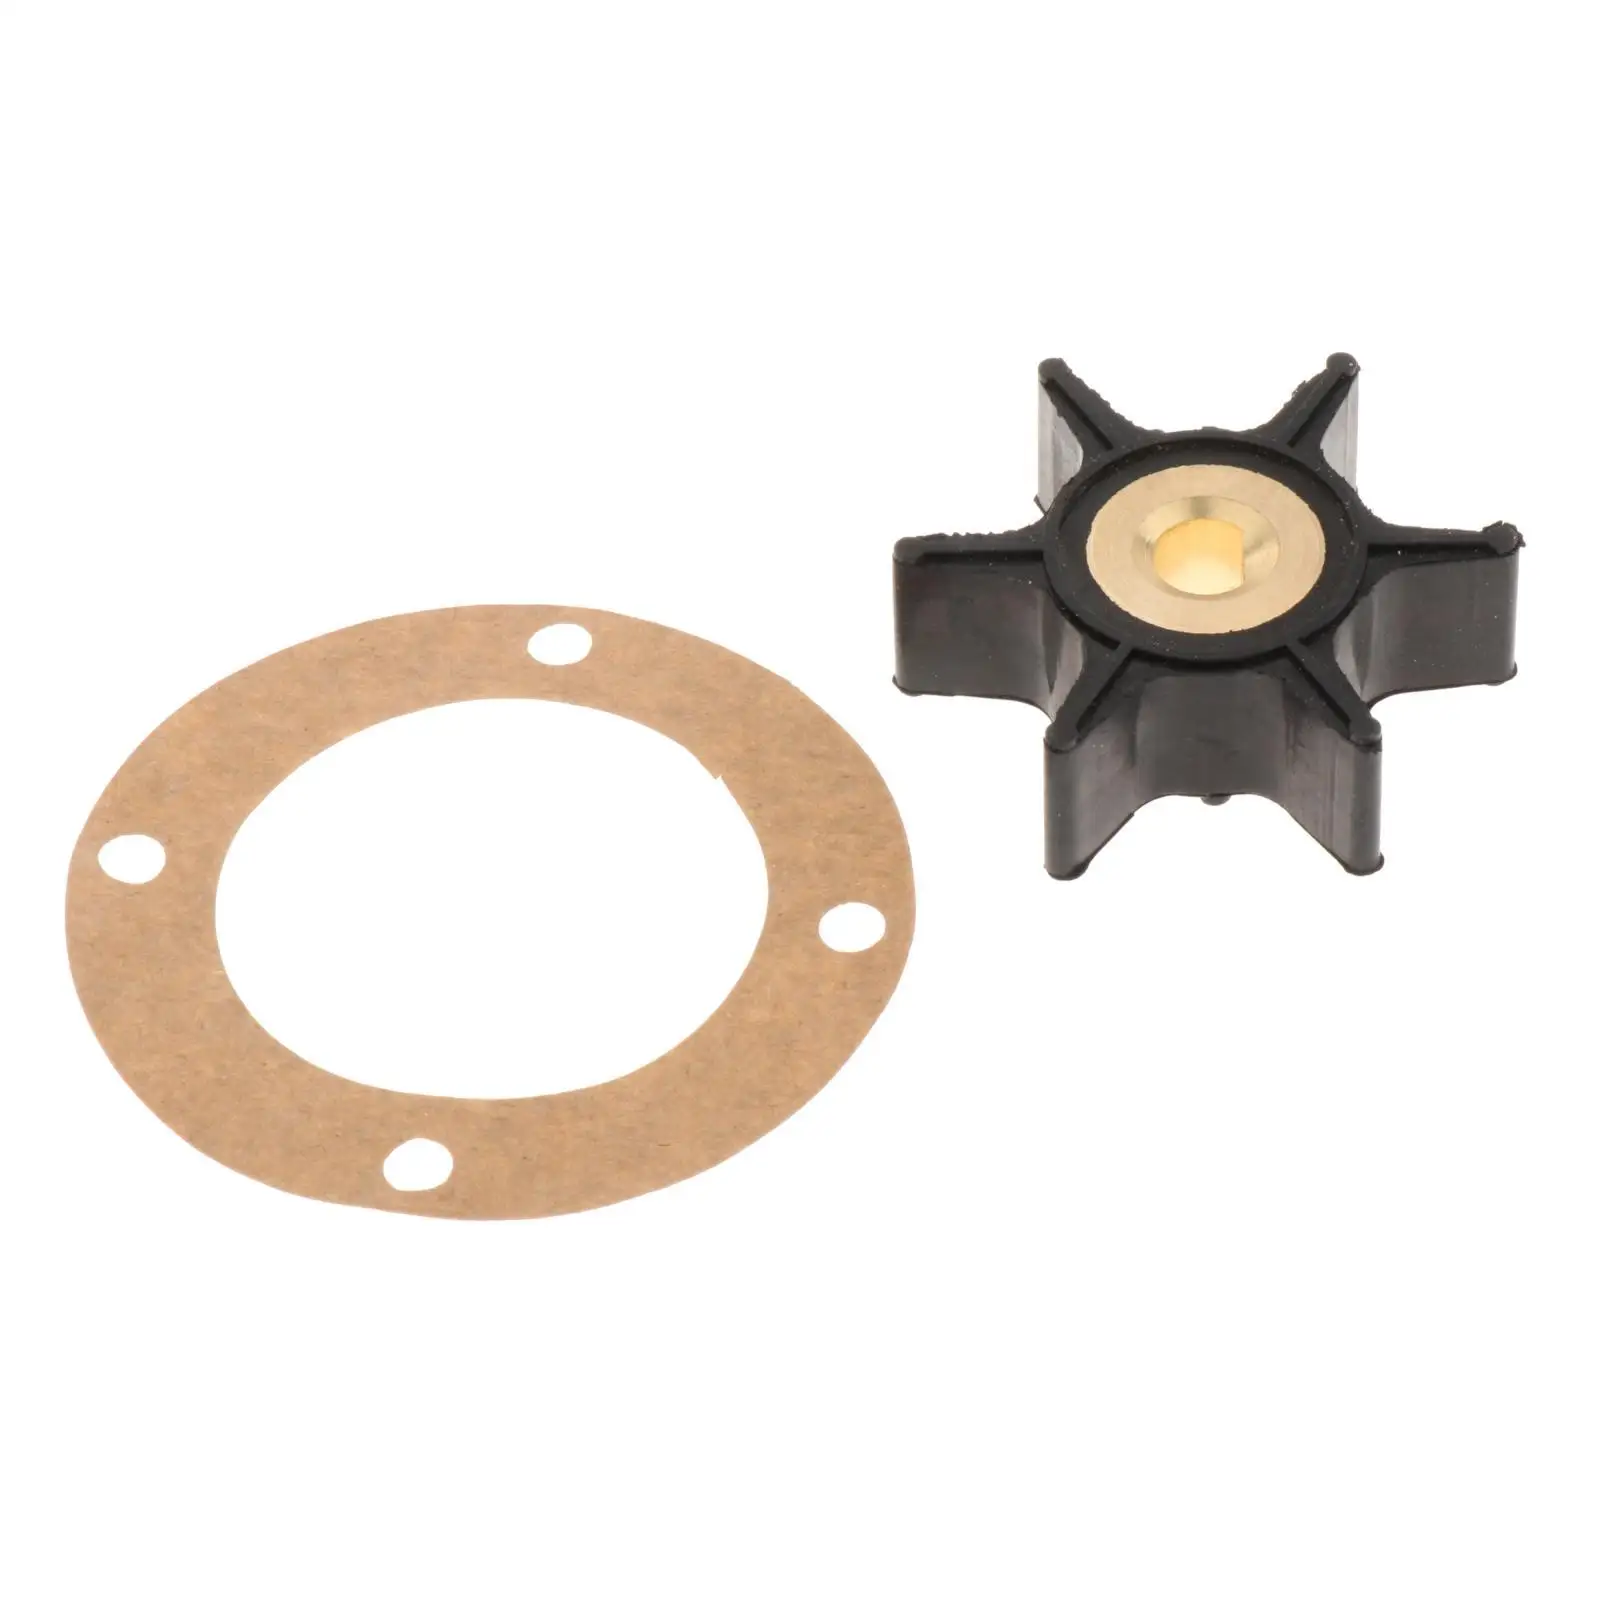 2Pcs Impeller and 4-Hole Gasket Kit Plastic Repair Kit Parts Replacement Impeller Kit for Onan 131-0386 170-3172 Pump